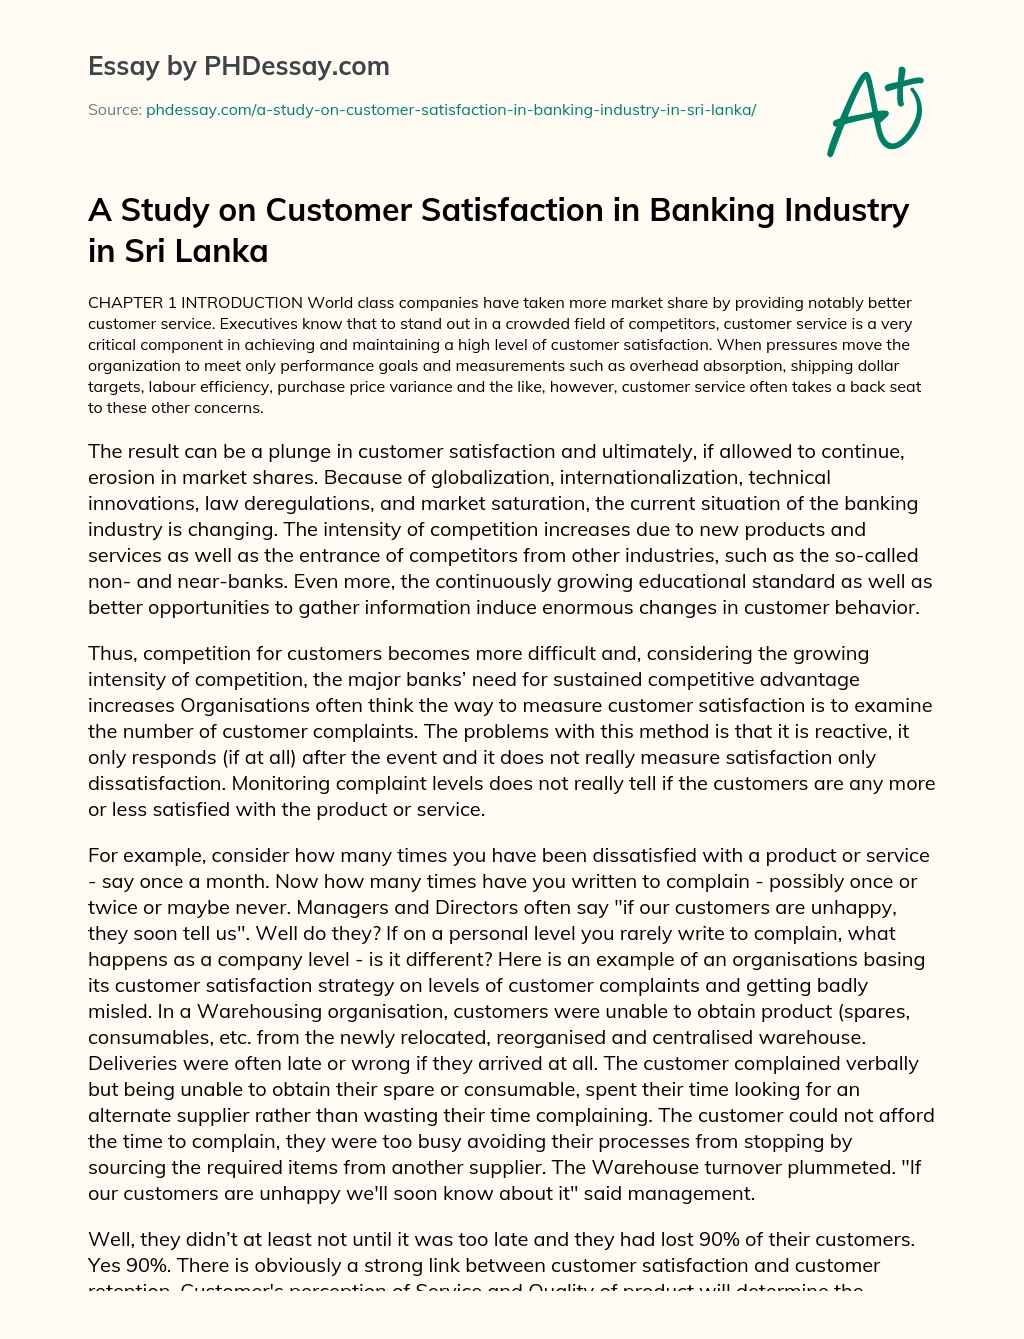 A Study on Customer Satisfaction in Banking Industry in Sri Lanka essay